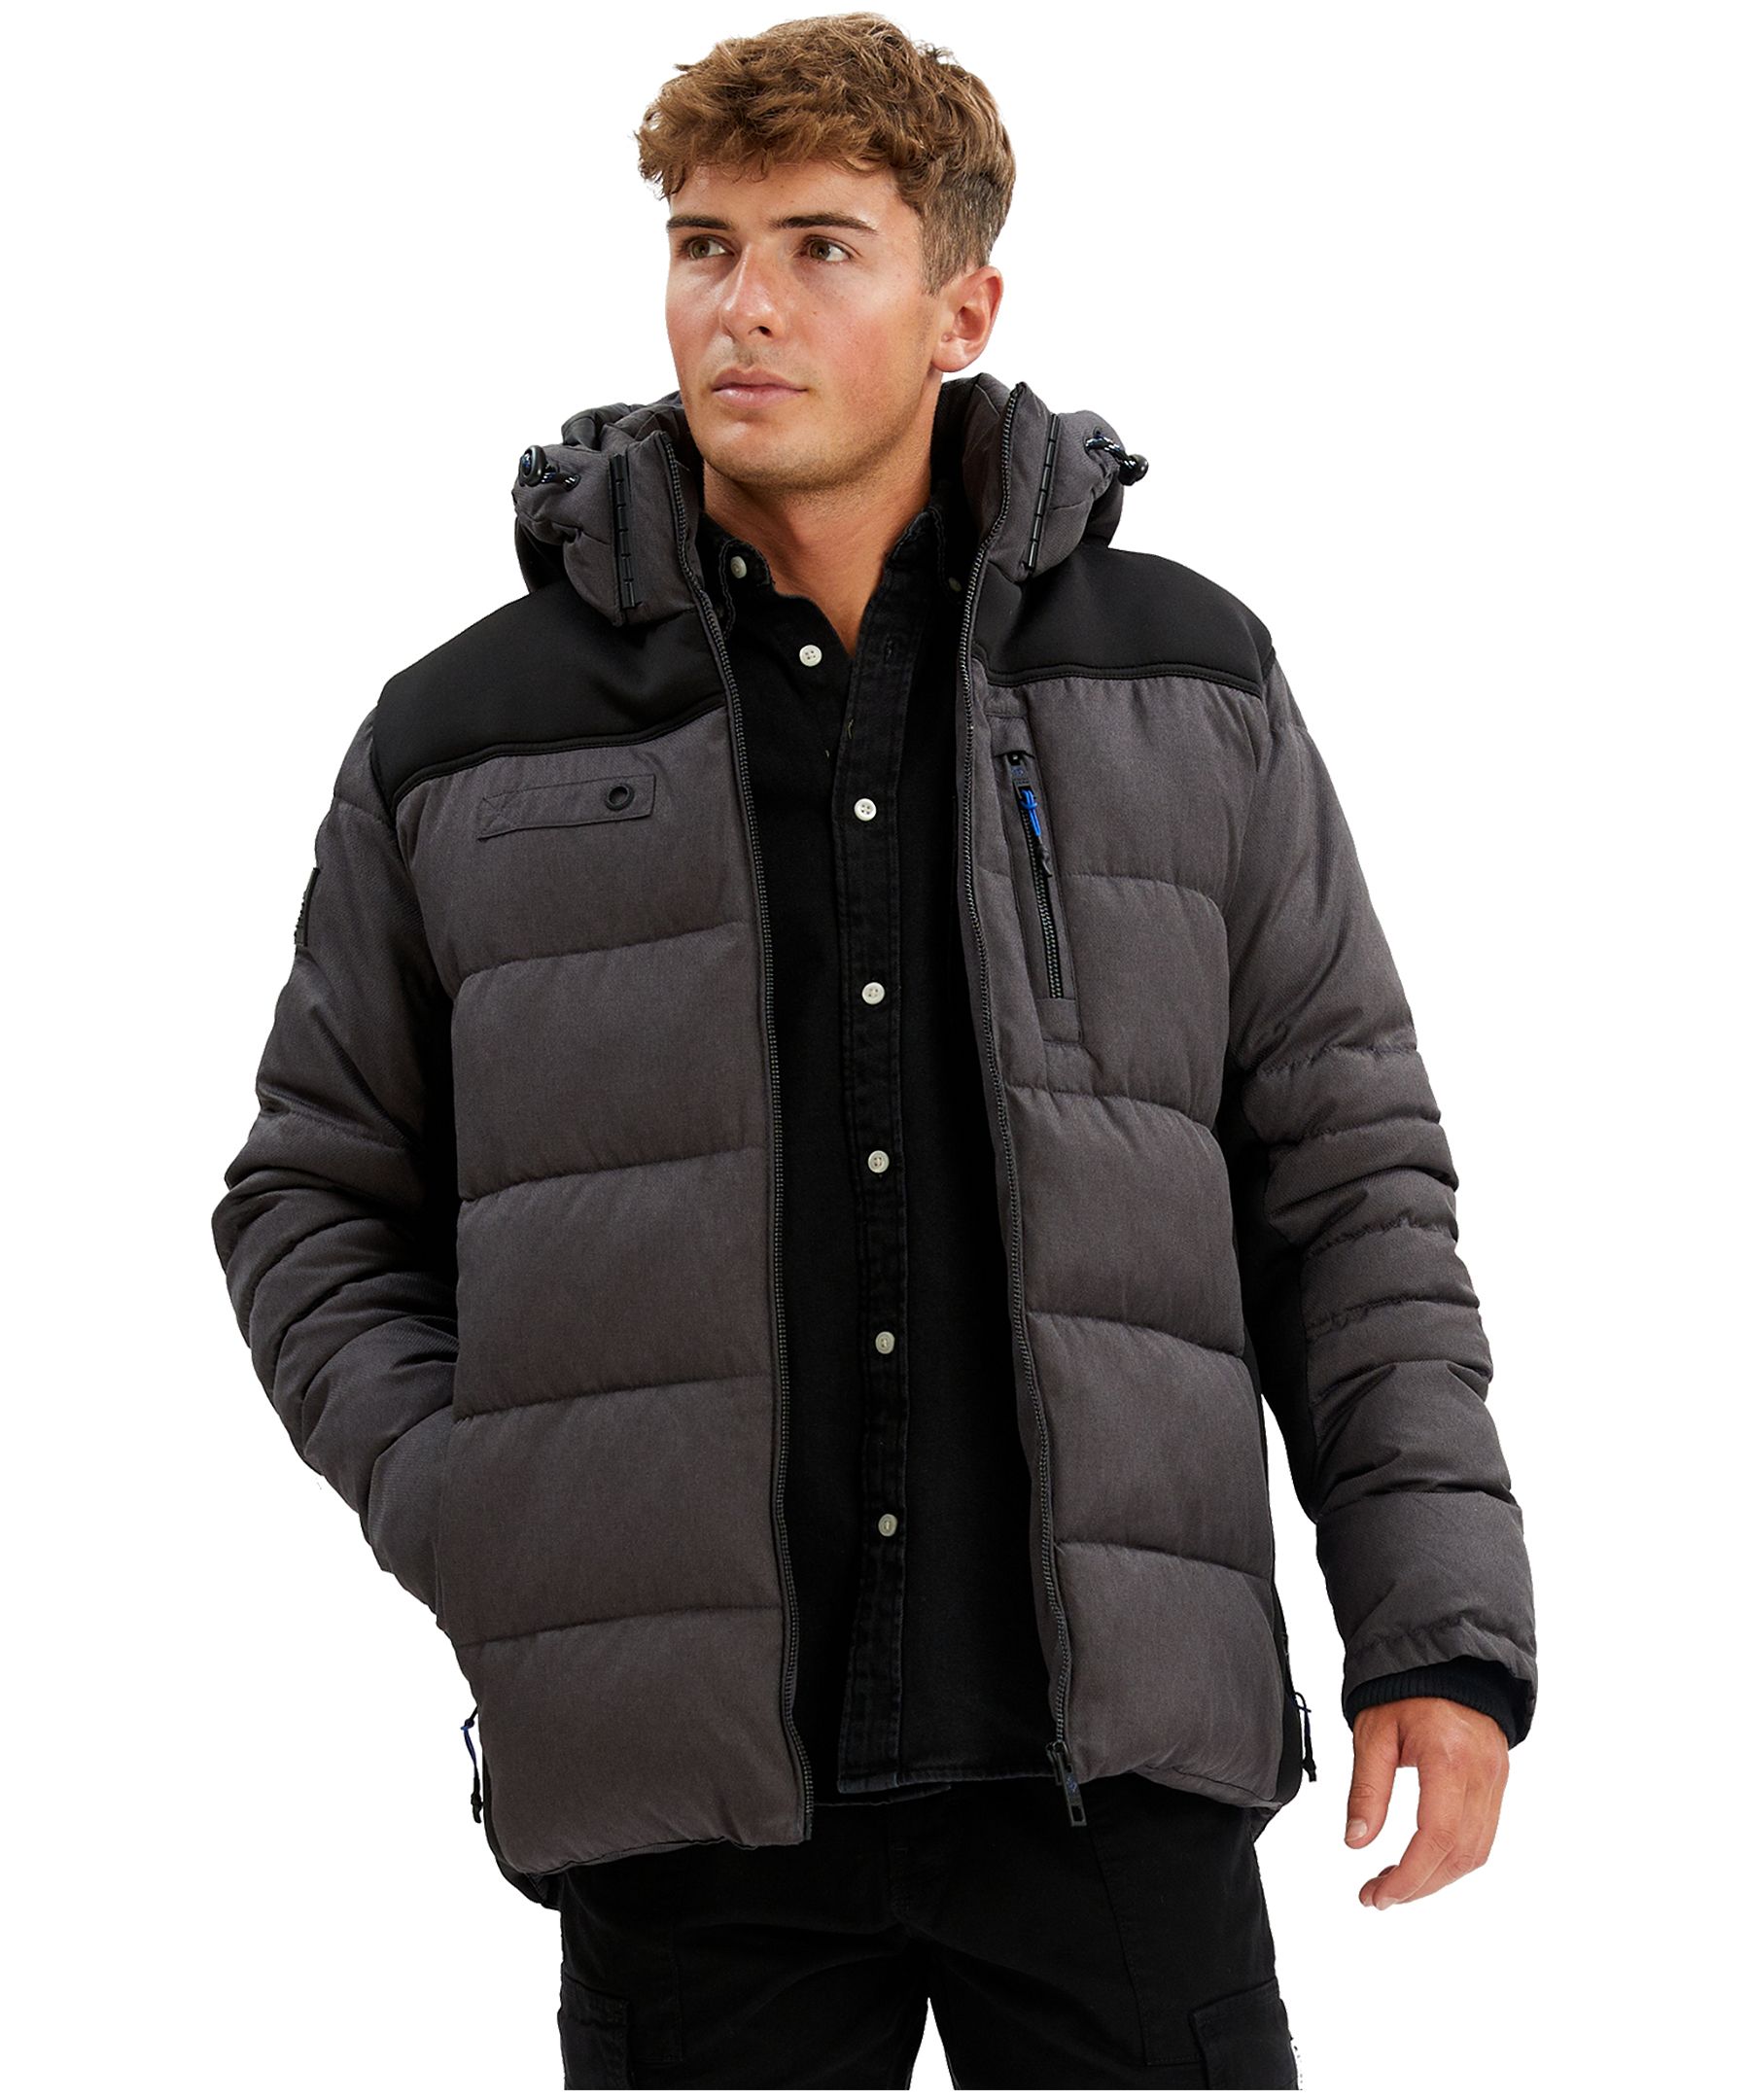 Help me choose a winter jacket : r/GoodValue